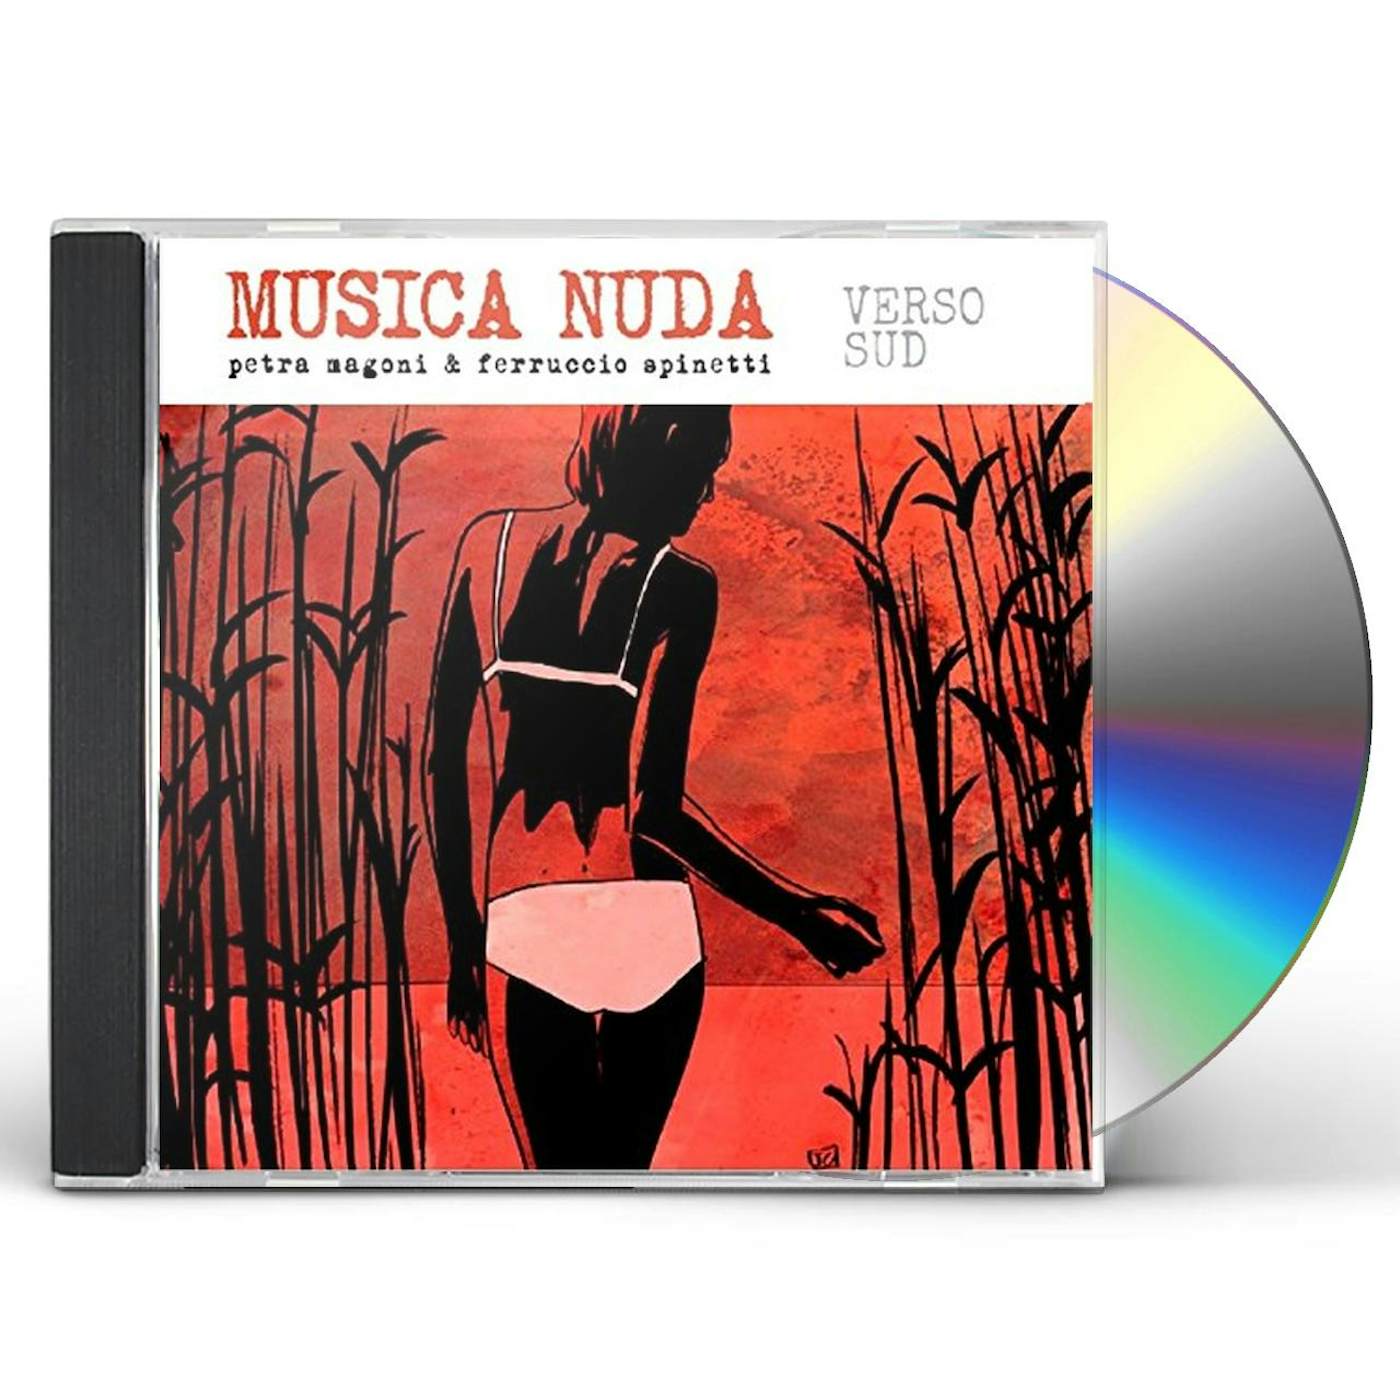 Musica Nuda VERSO SUD CD